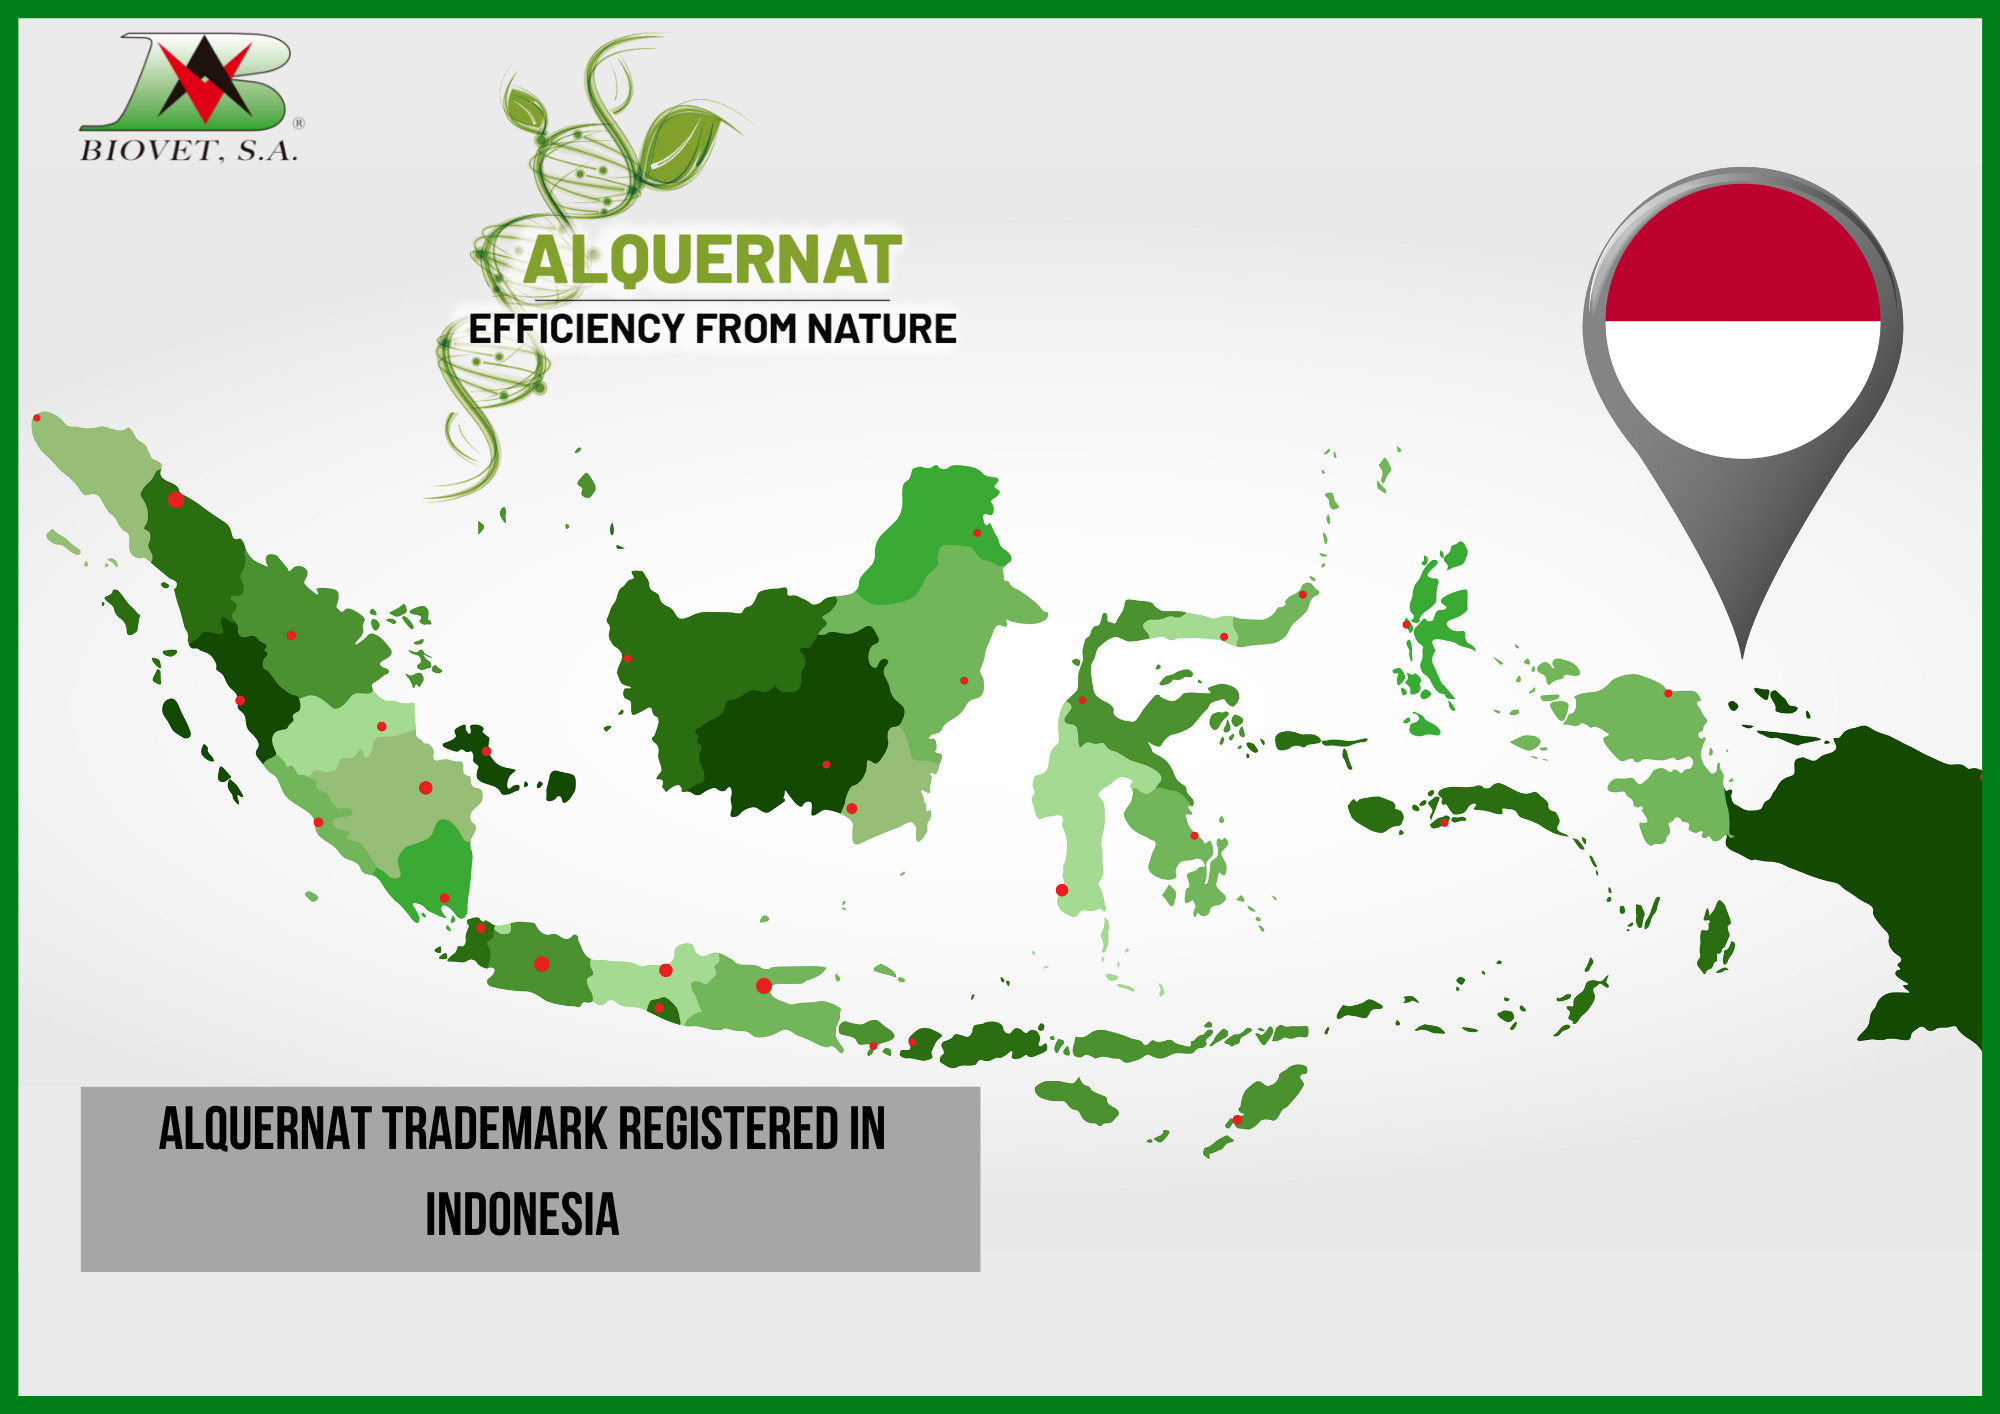 Alquernat trademark registered in Indonesia